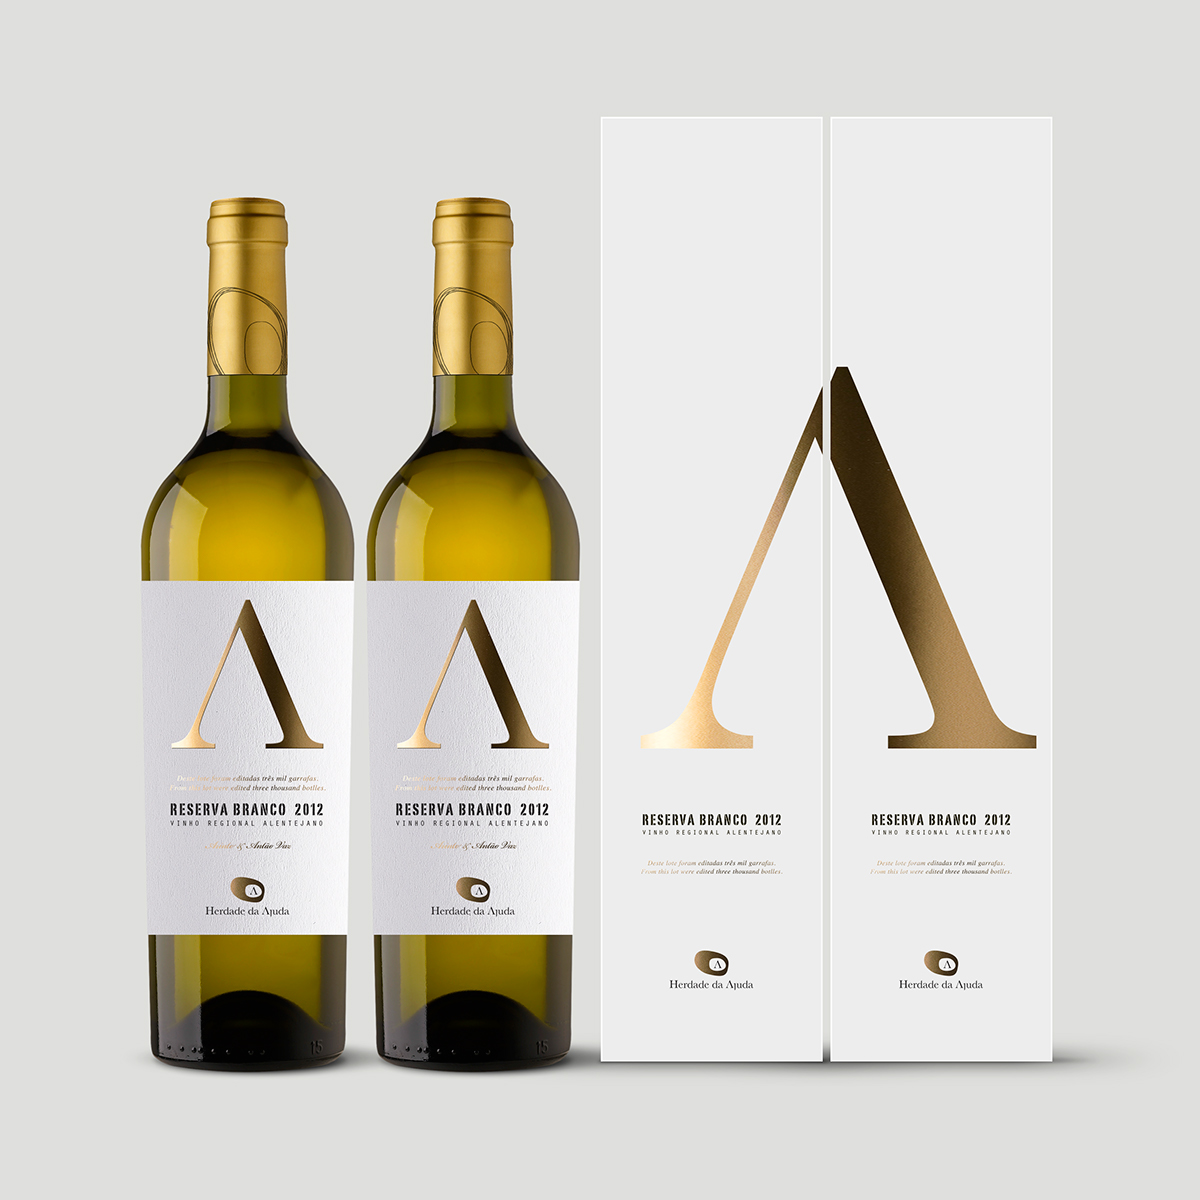 Nektar Brand Advertisers Label wine gold Herdade da Ajuda White Wine Portugal alentejo Miguel Batista Lisbon